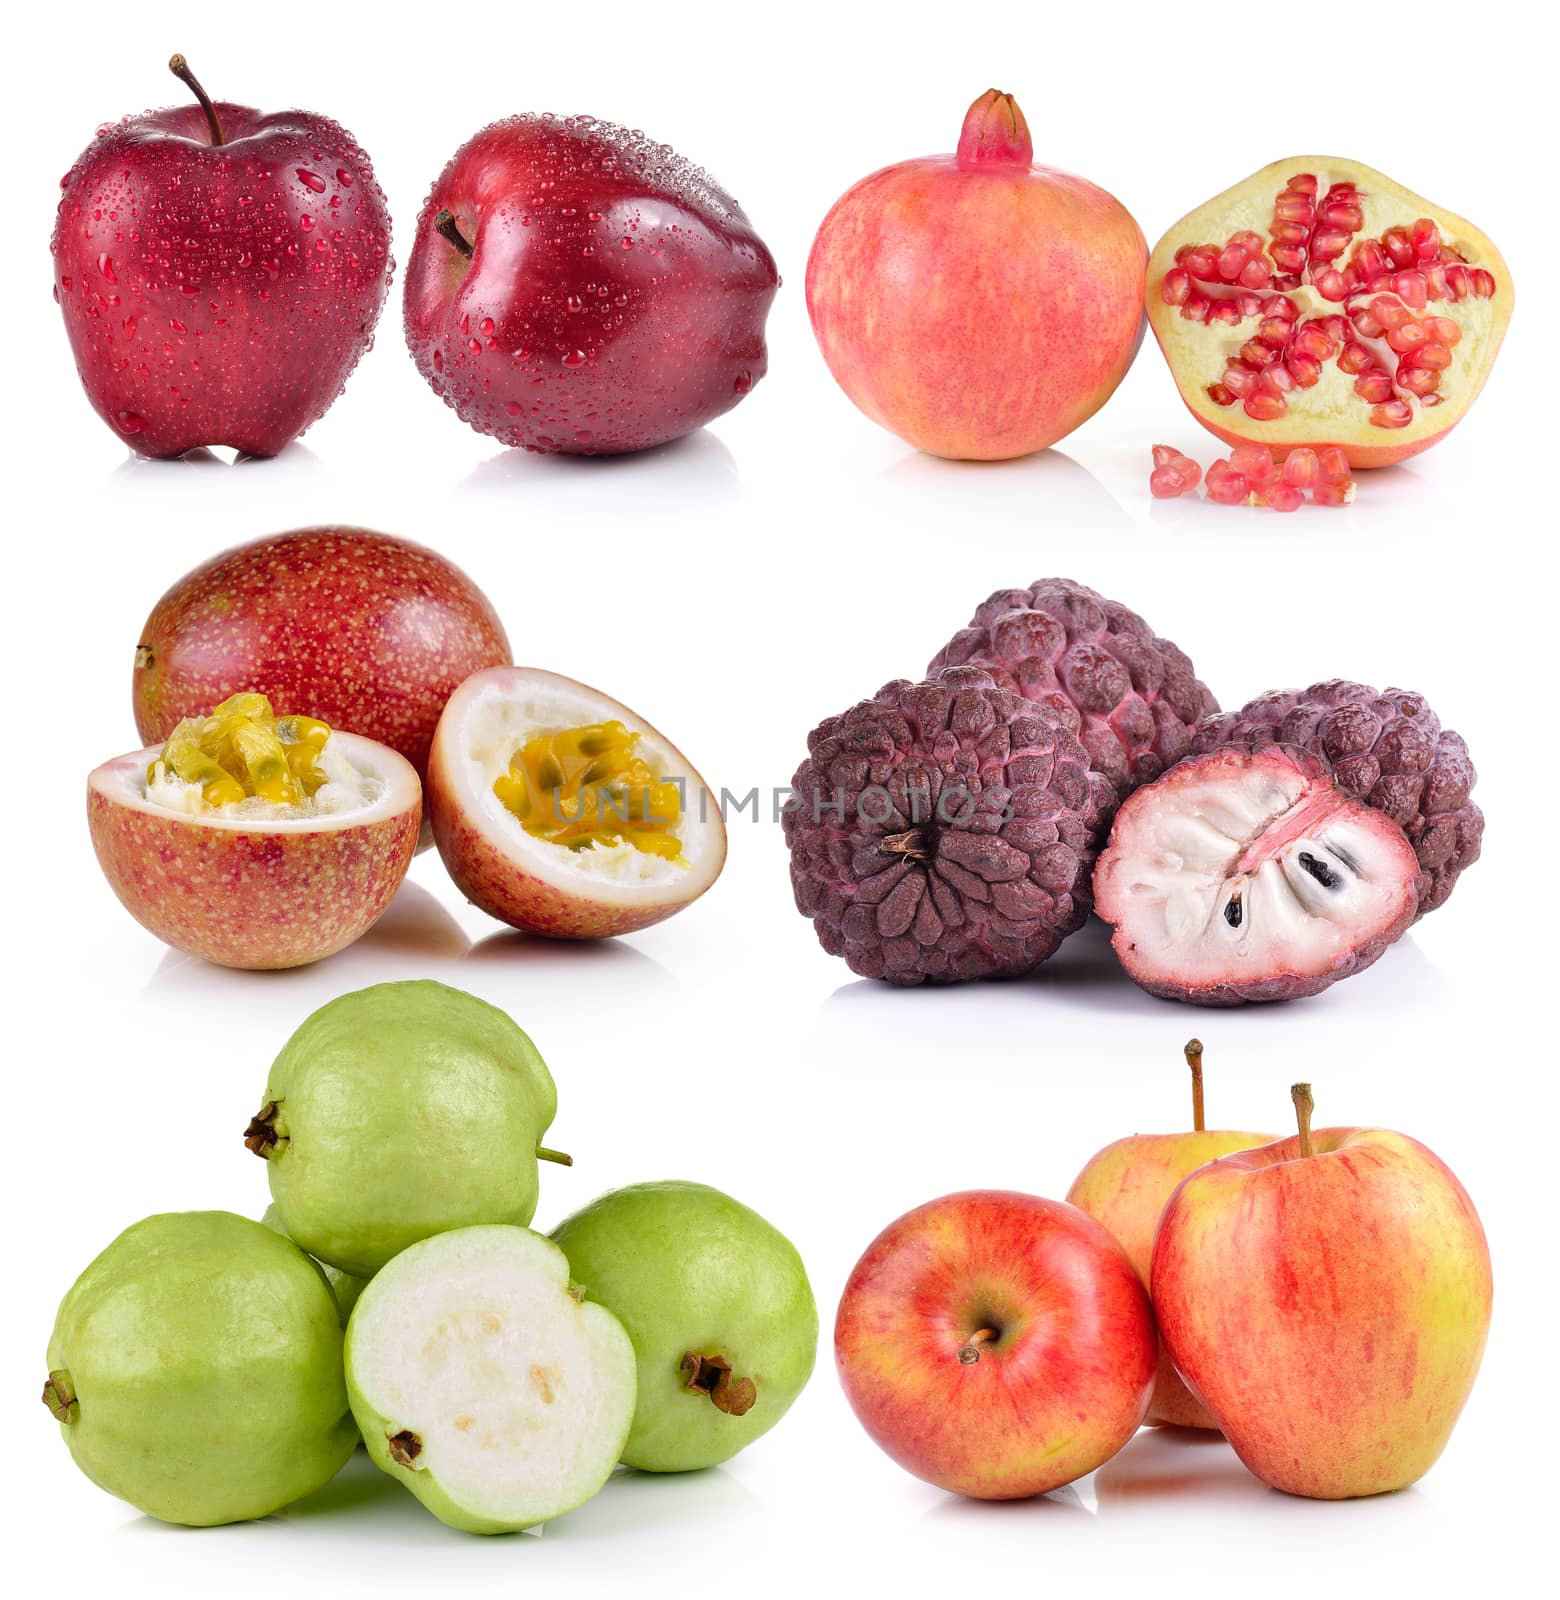 guava, apple, custard apple, Passion fruit, pomegranates on whit by sommai